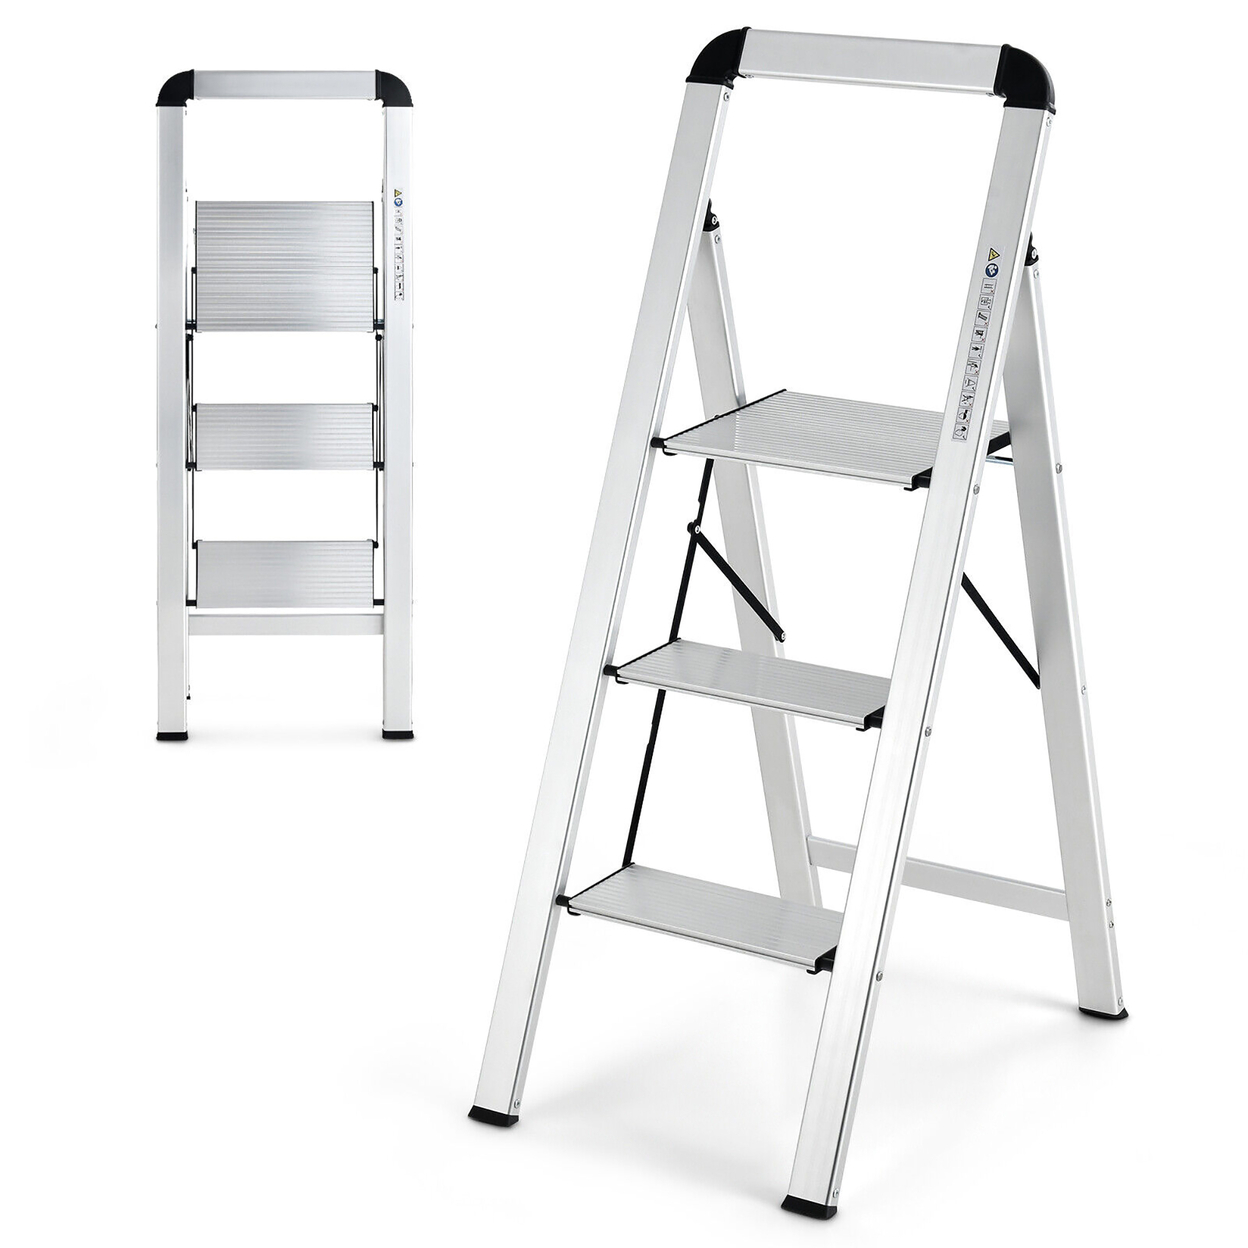 3 Step Ladder Aluminum Folding Step Stool 330lbs Lightweight W/ Non-Slip Pedal